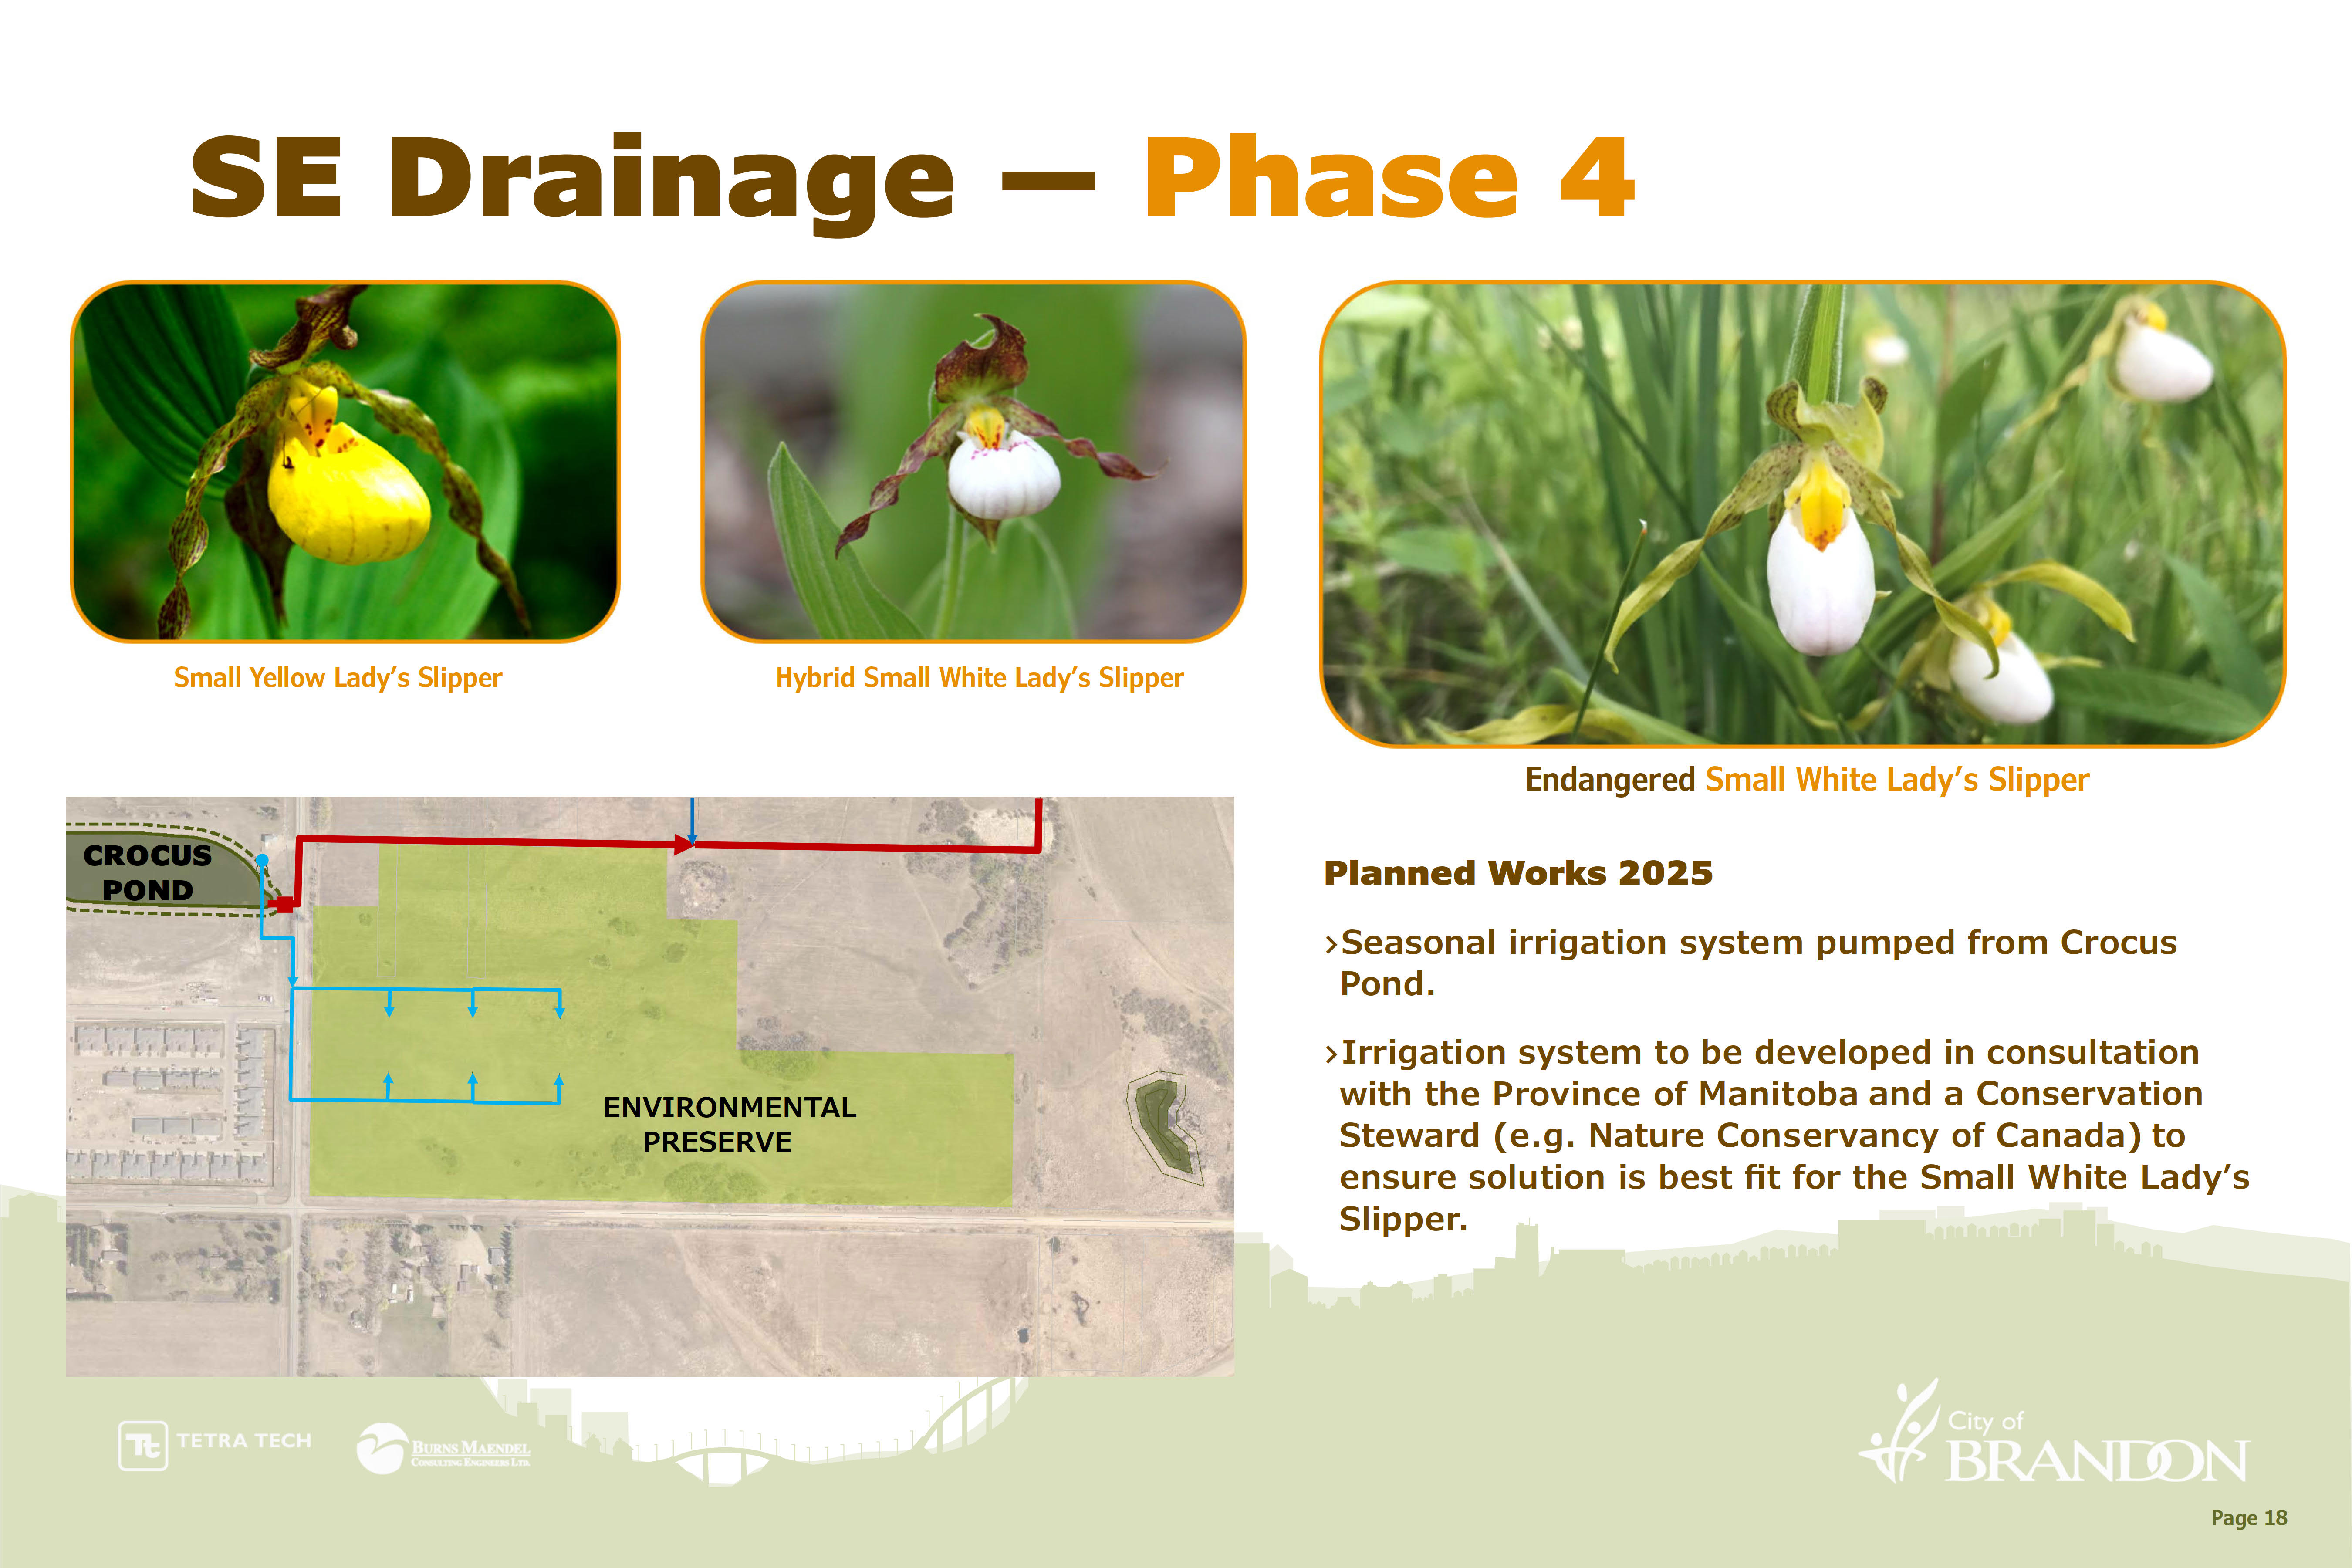 Southeast Drainage - Phase 4